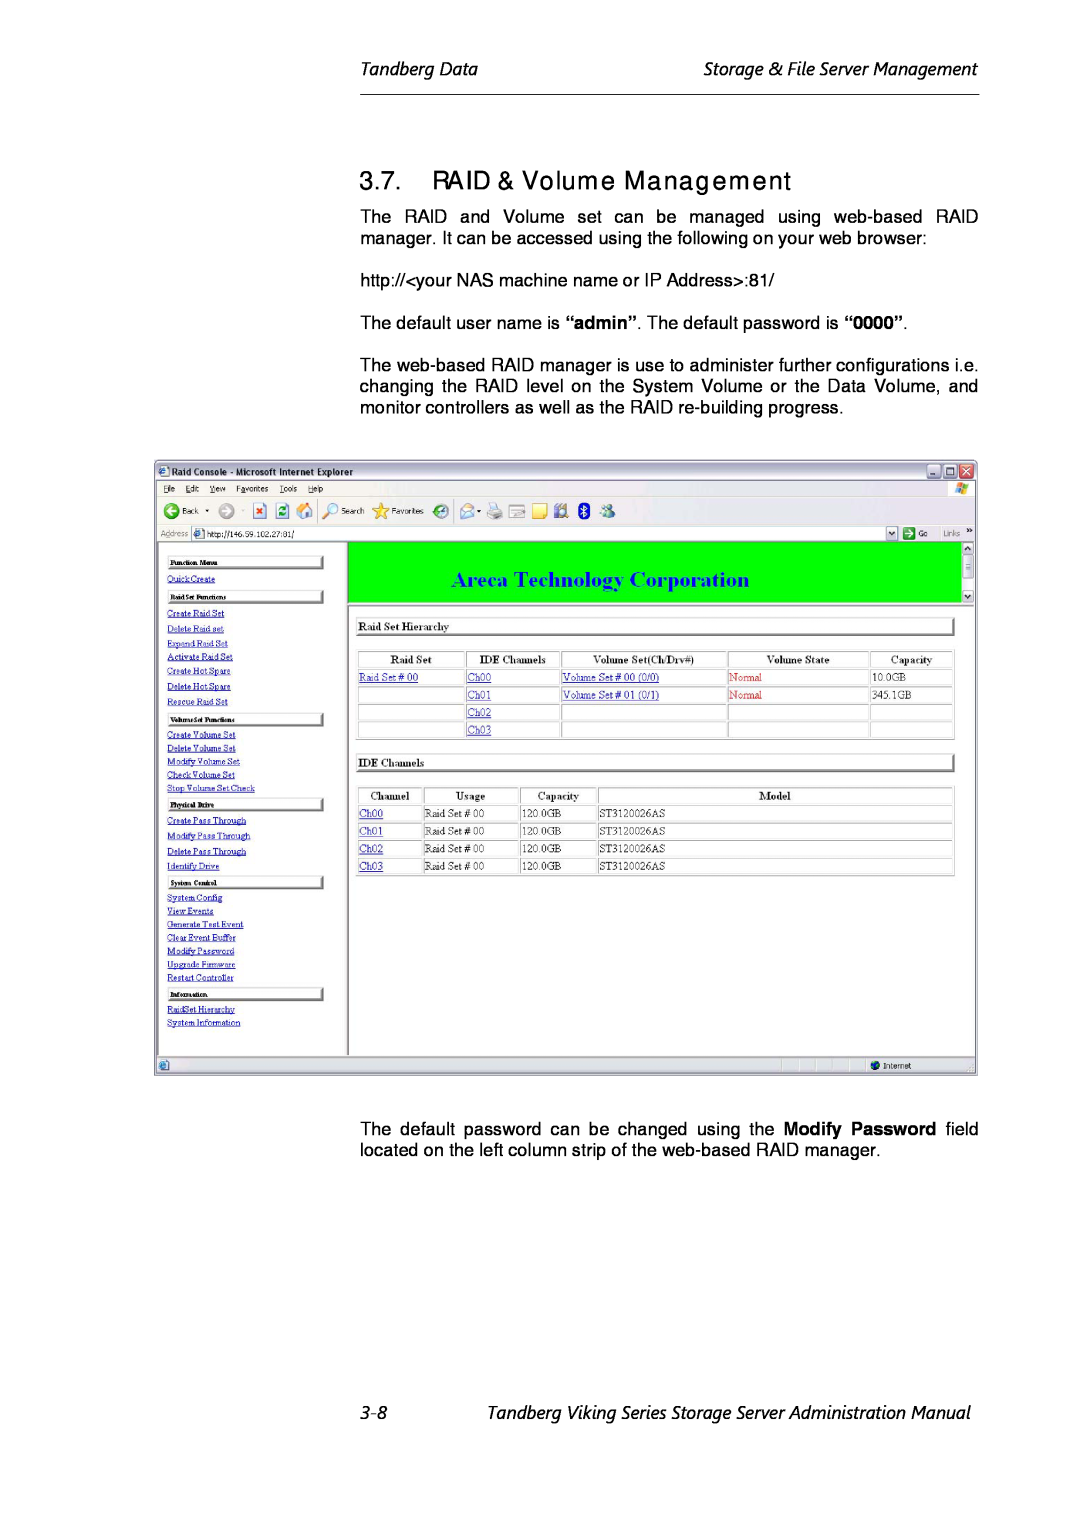 Tandberg Data Viking FS-1500, Viking FS-1600 manual RAID & Volume Management, Tandberg DataStorage & File Server Management 